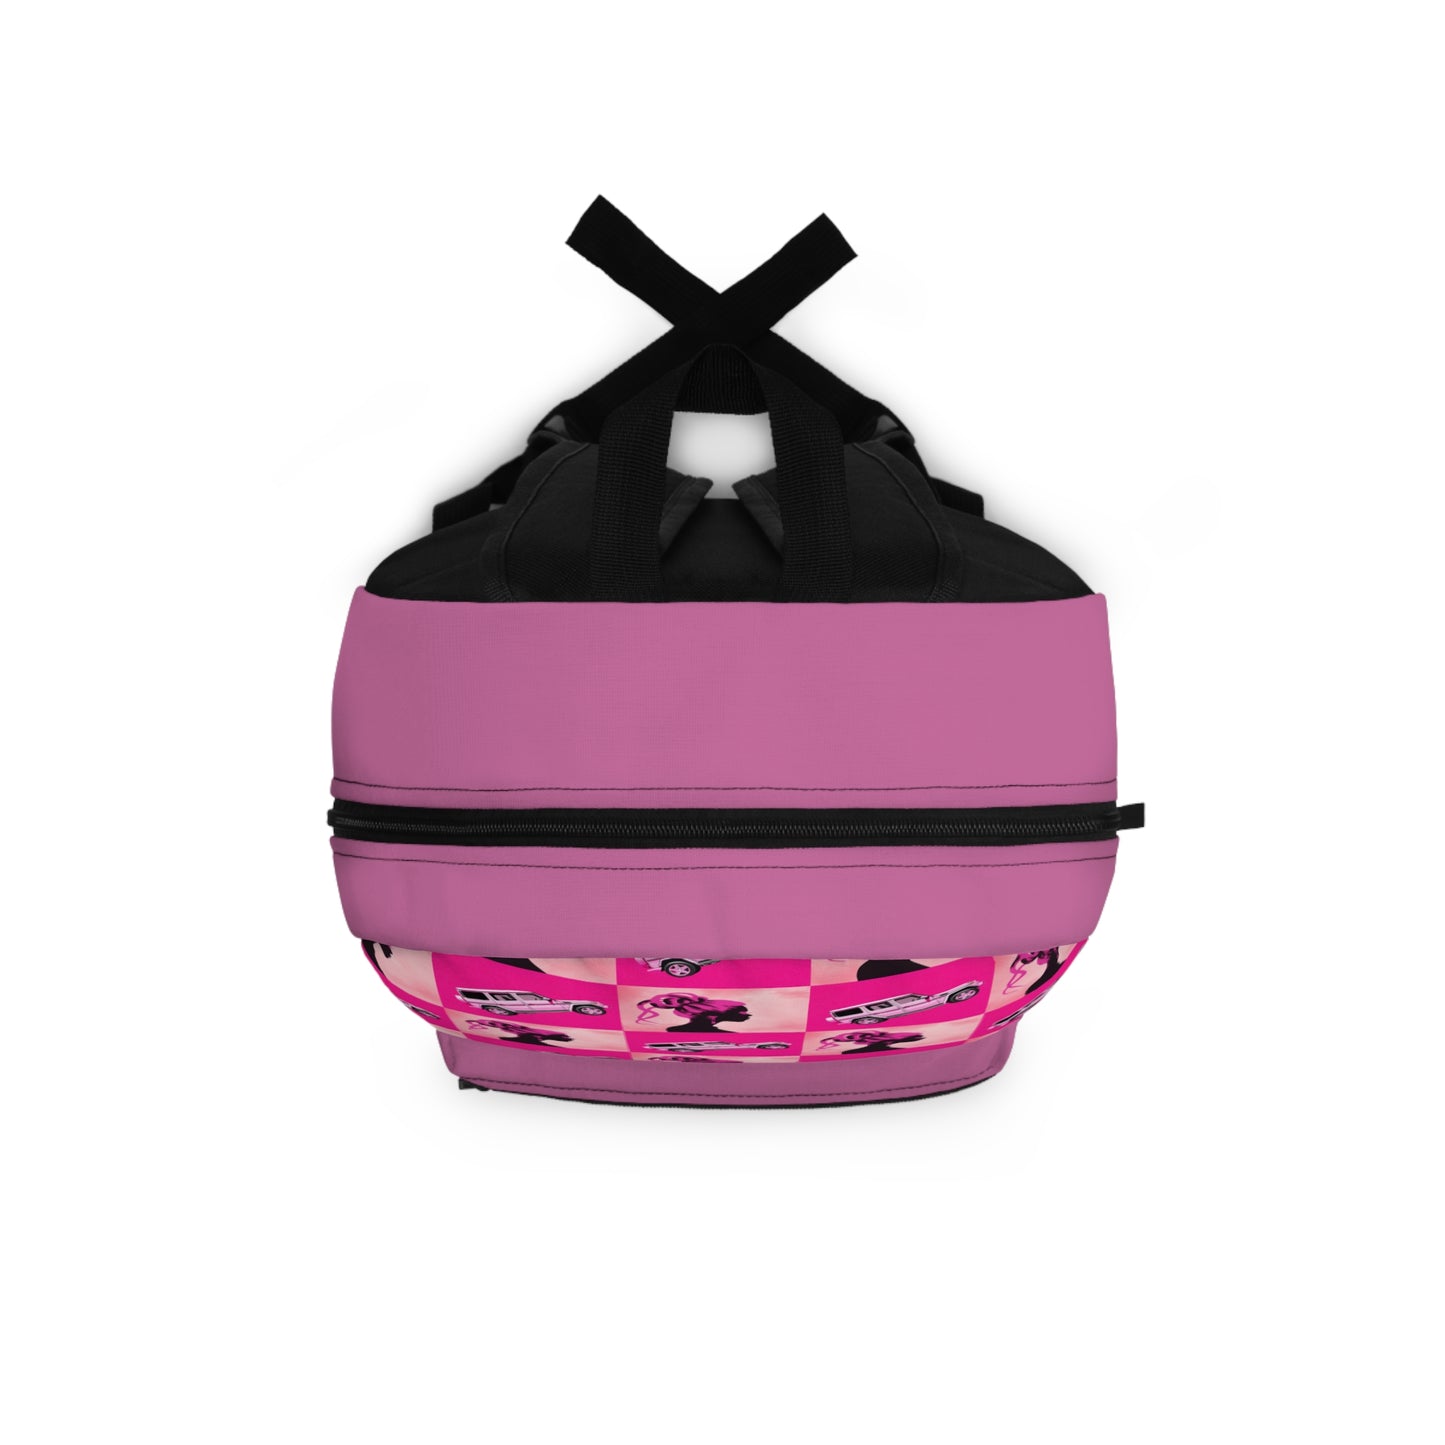 Modern Barbie Pink Backpack